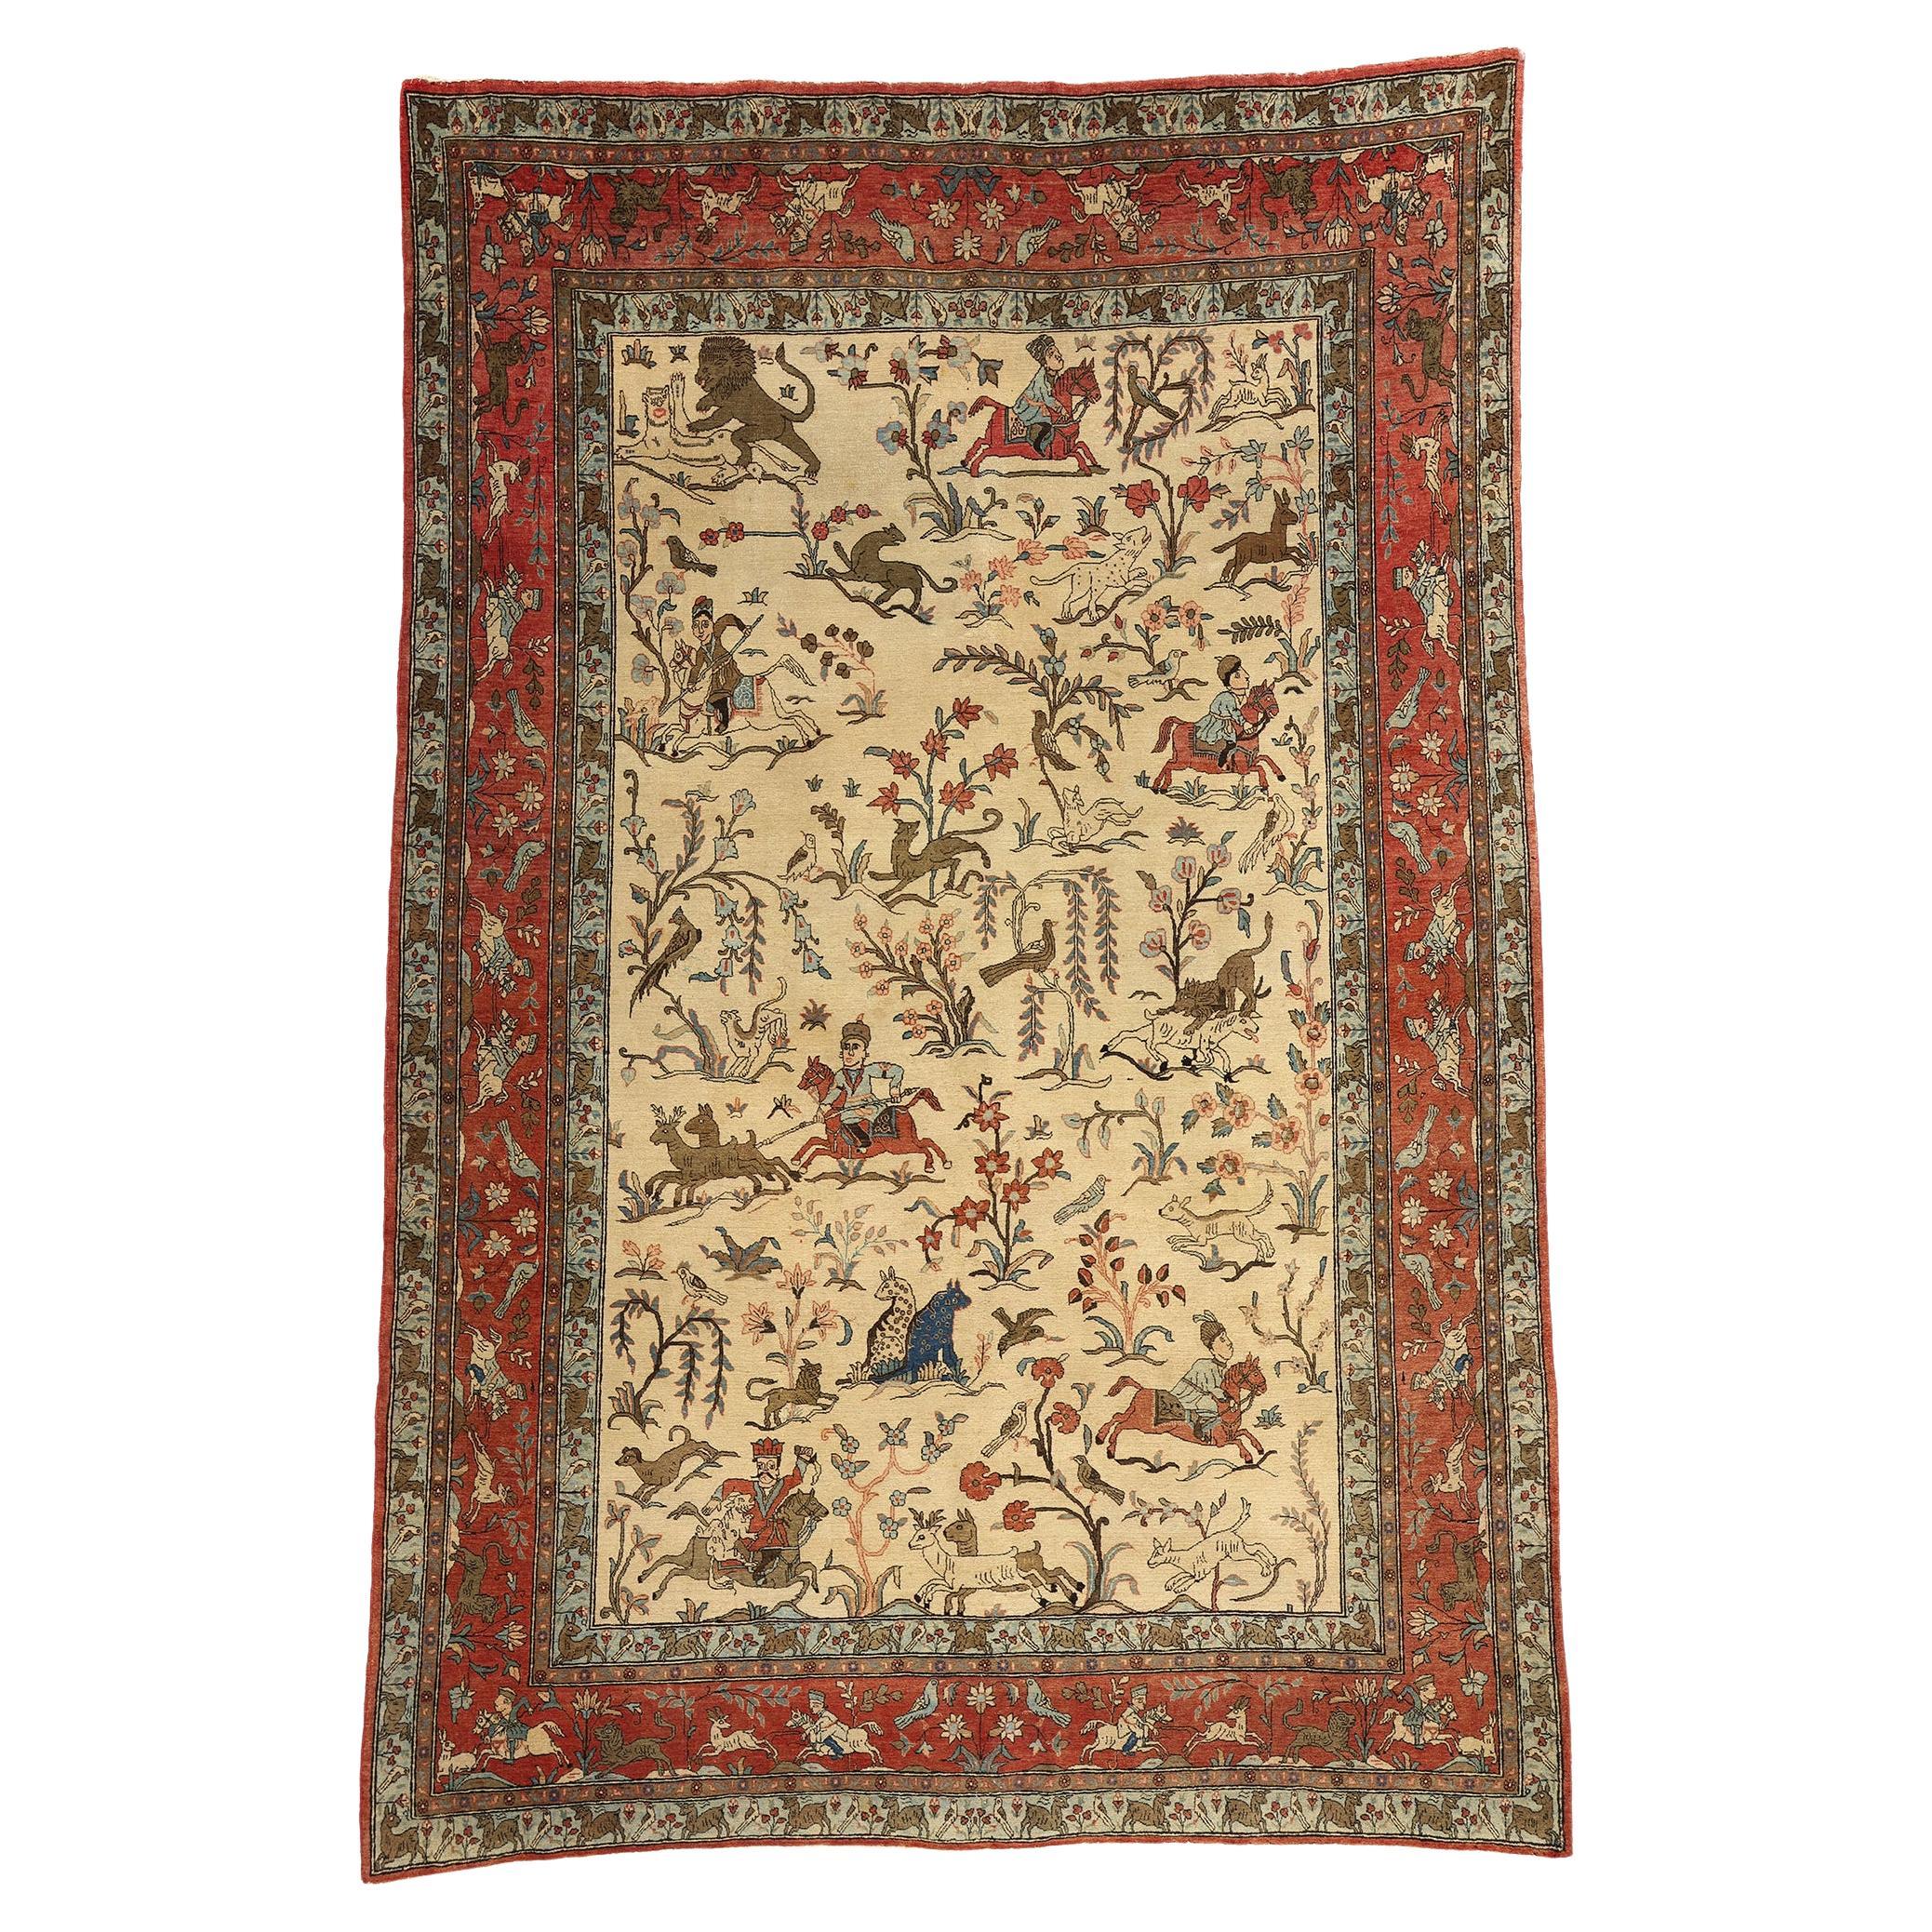 Vintage Persian Tabriz Hunting Pictorial Tableau Carpet